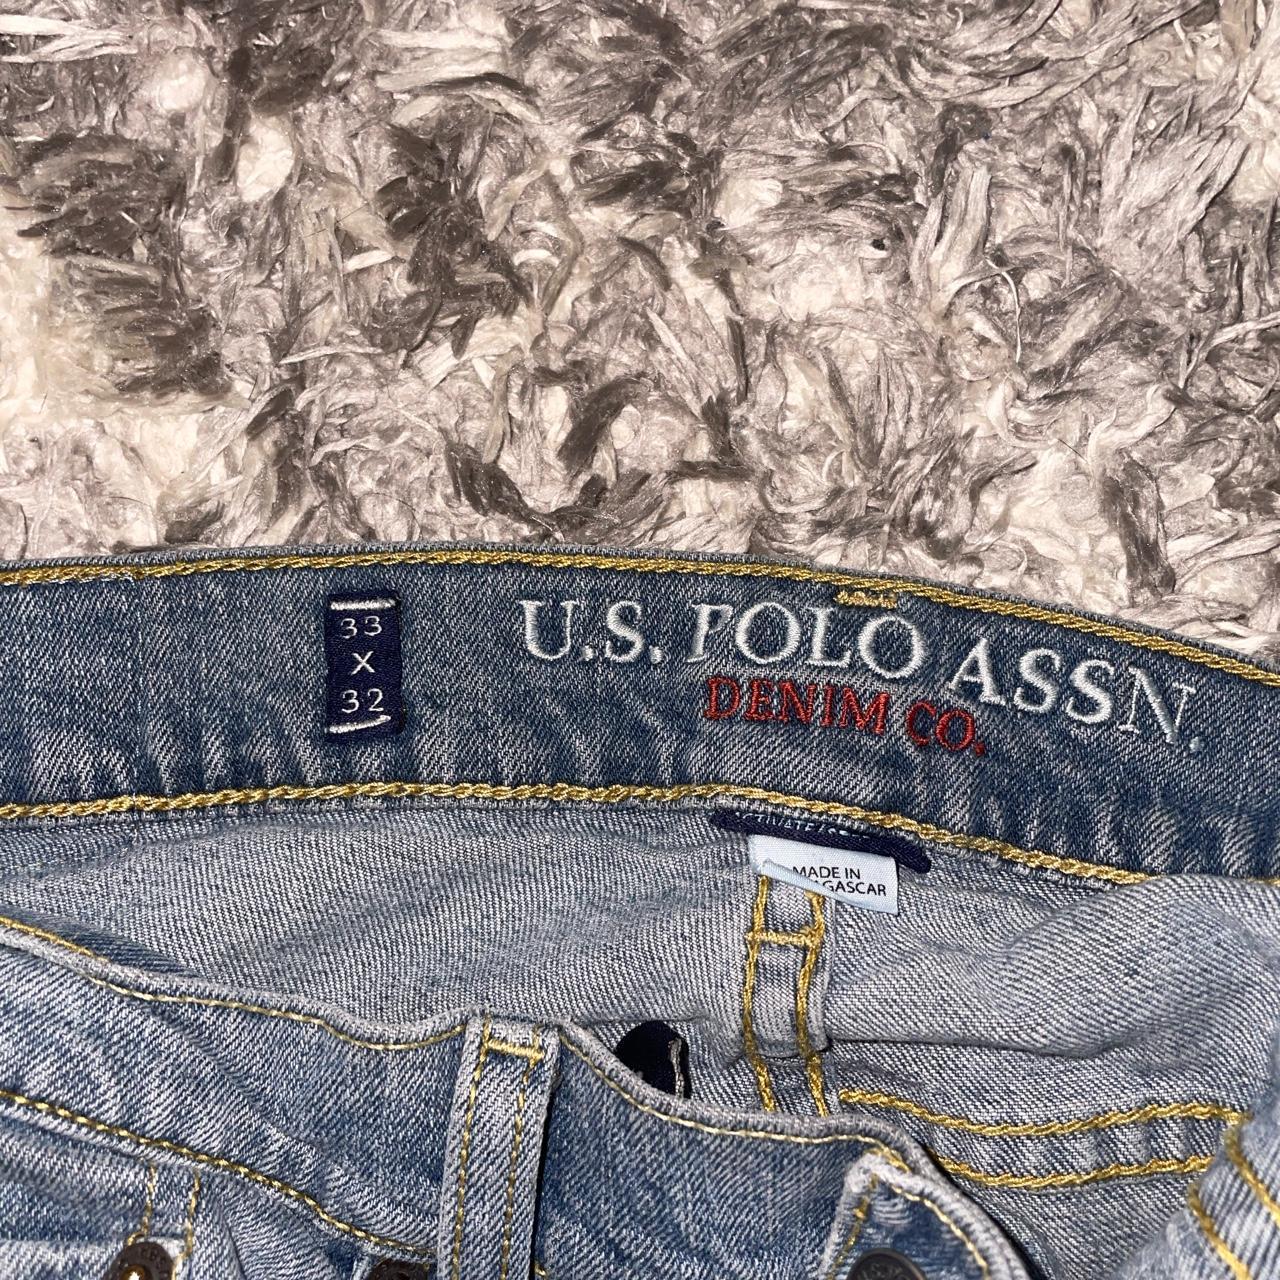 U.S. Polo Assn. Men's Jeans